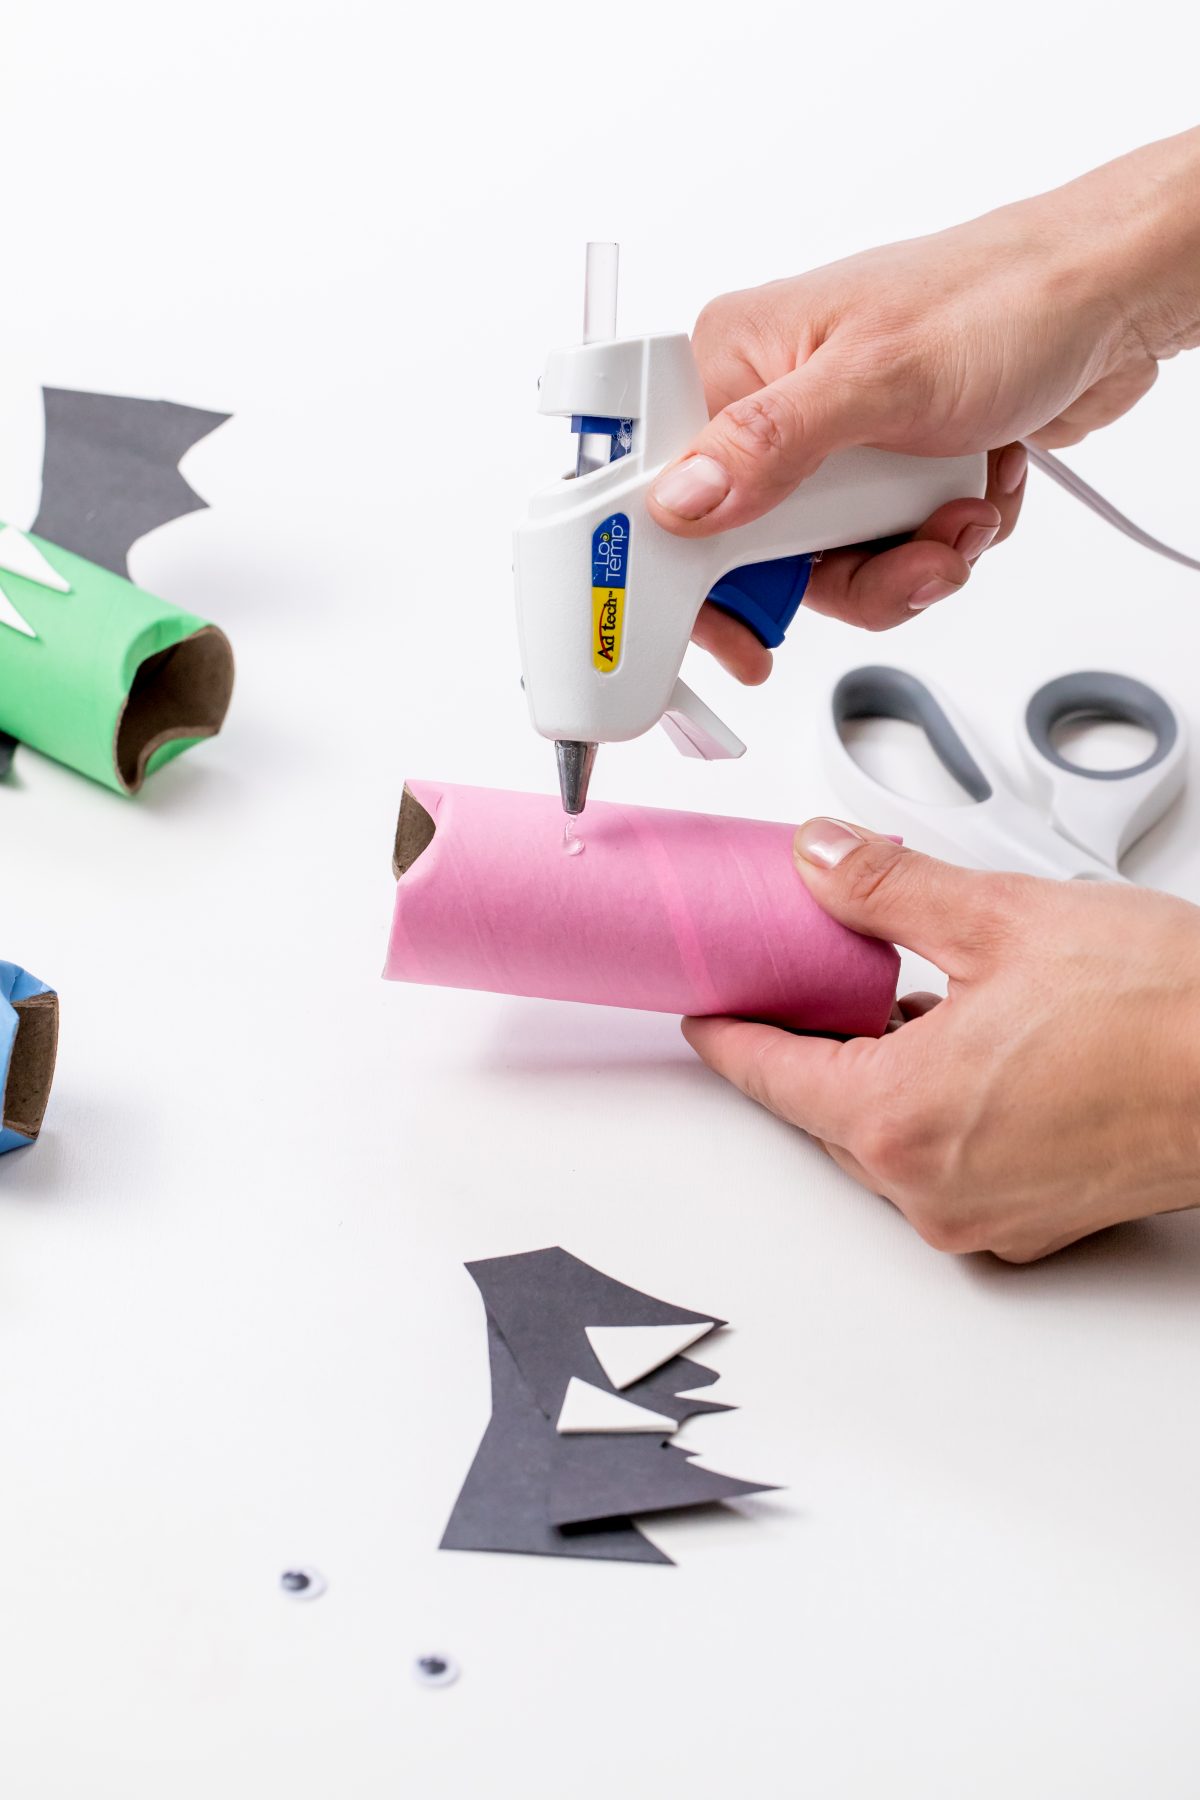 Use glue gun to adhere glue to paper tube